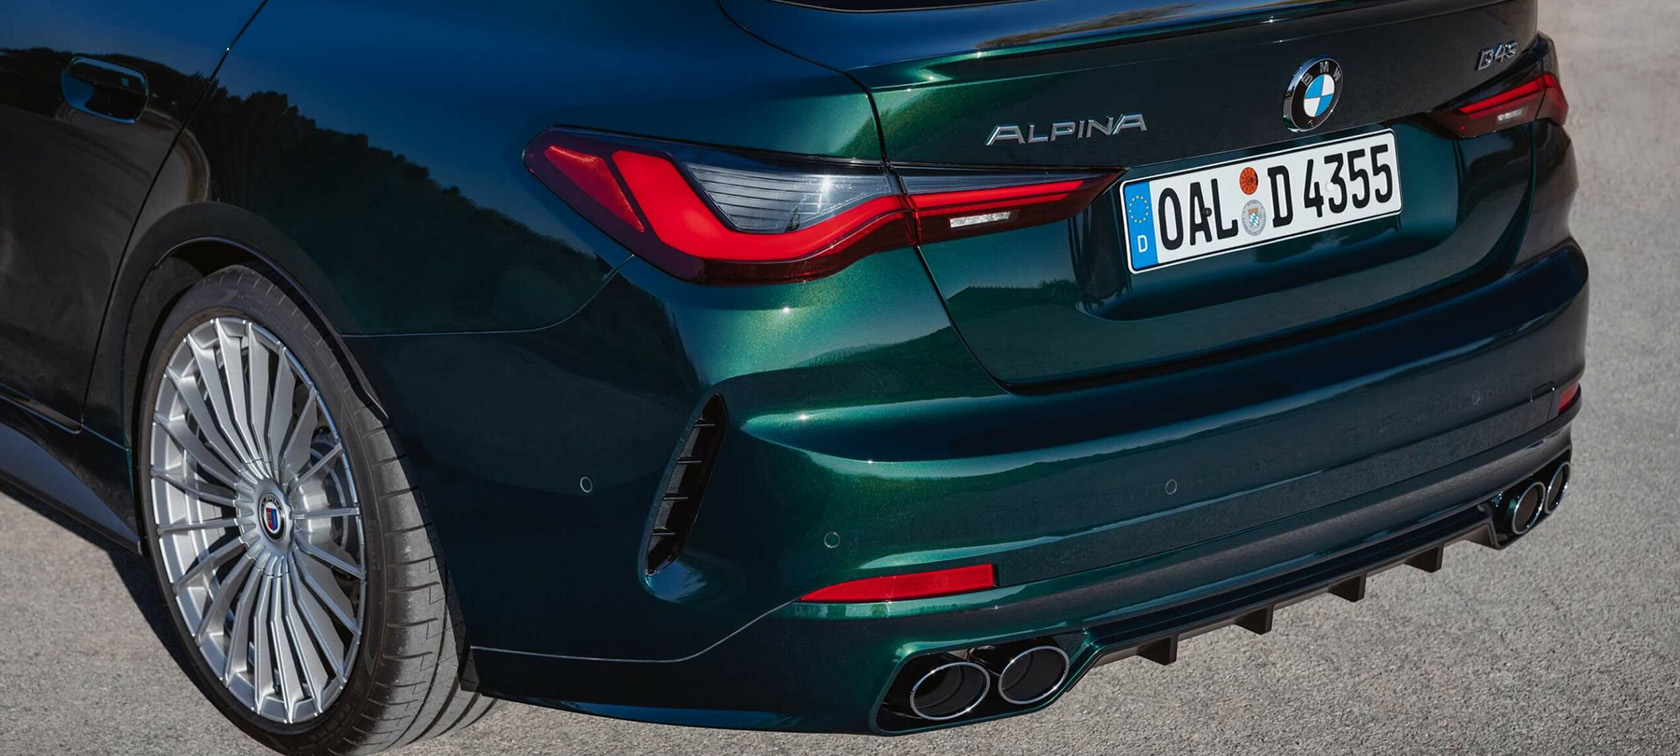 ALPINA D4 S Gran Coupe بی ام و با انبوهی از گشتاور معرفی شد